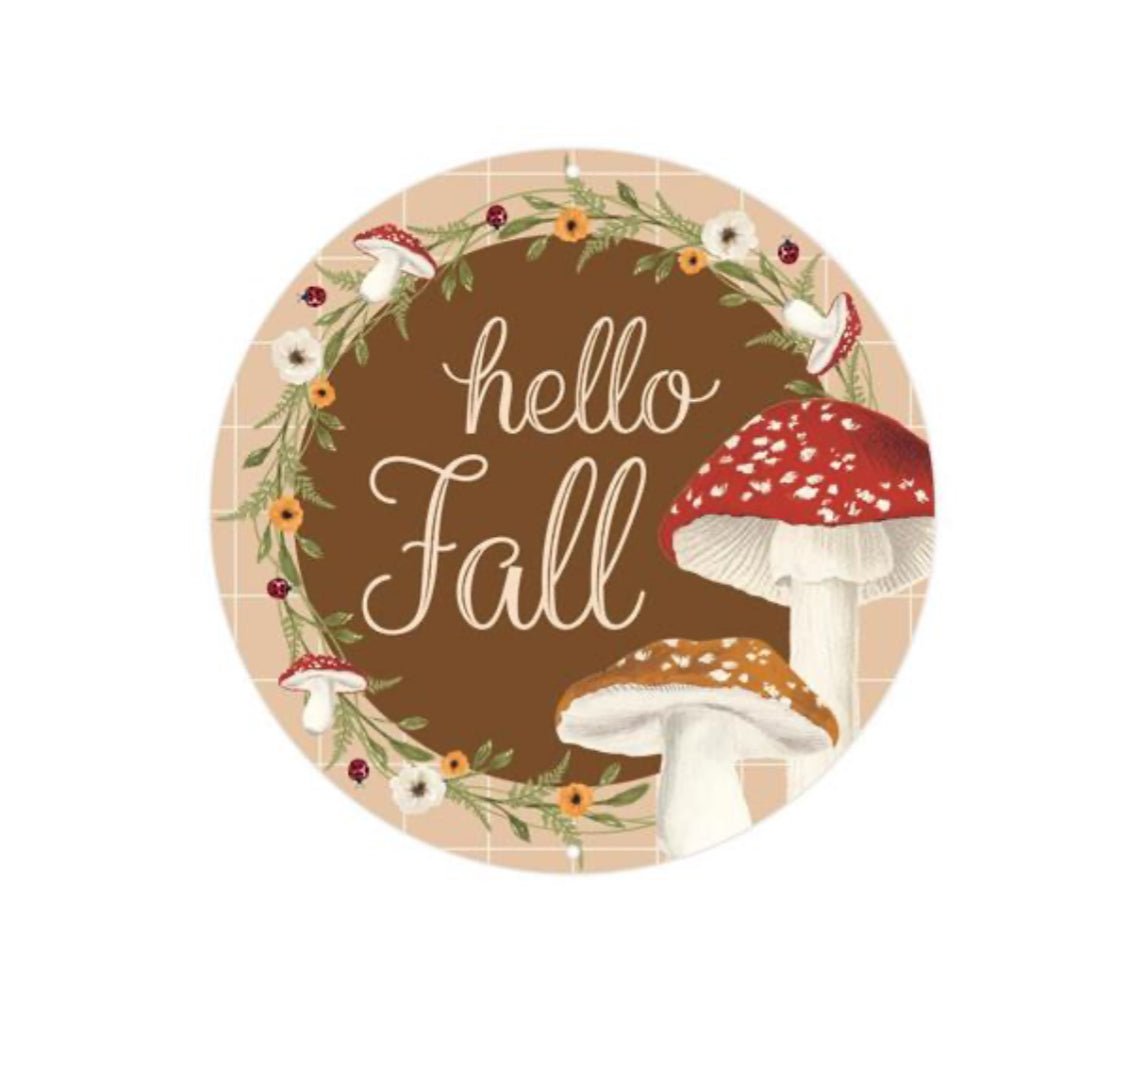 Mushrooms fall round metal sign 8” - Greenery MarketSeasonal & Holiday DecorationsMD1176